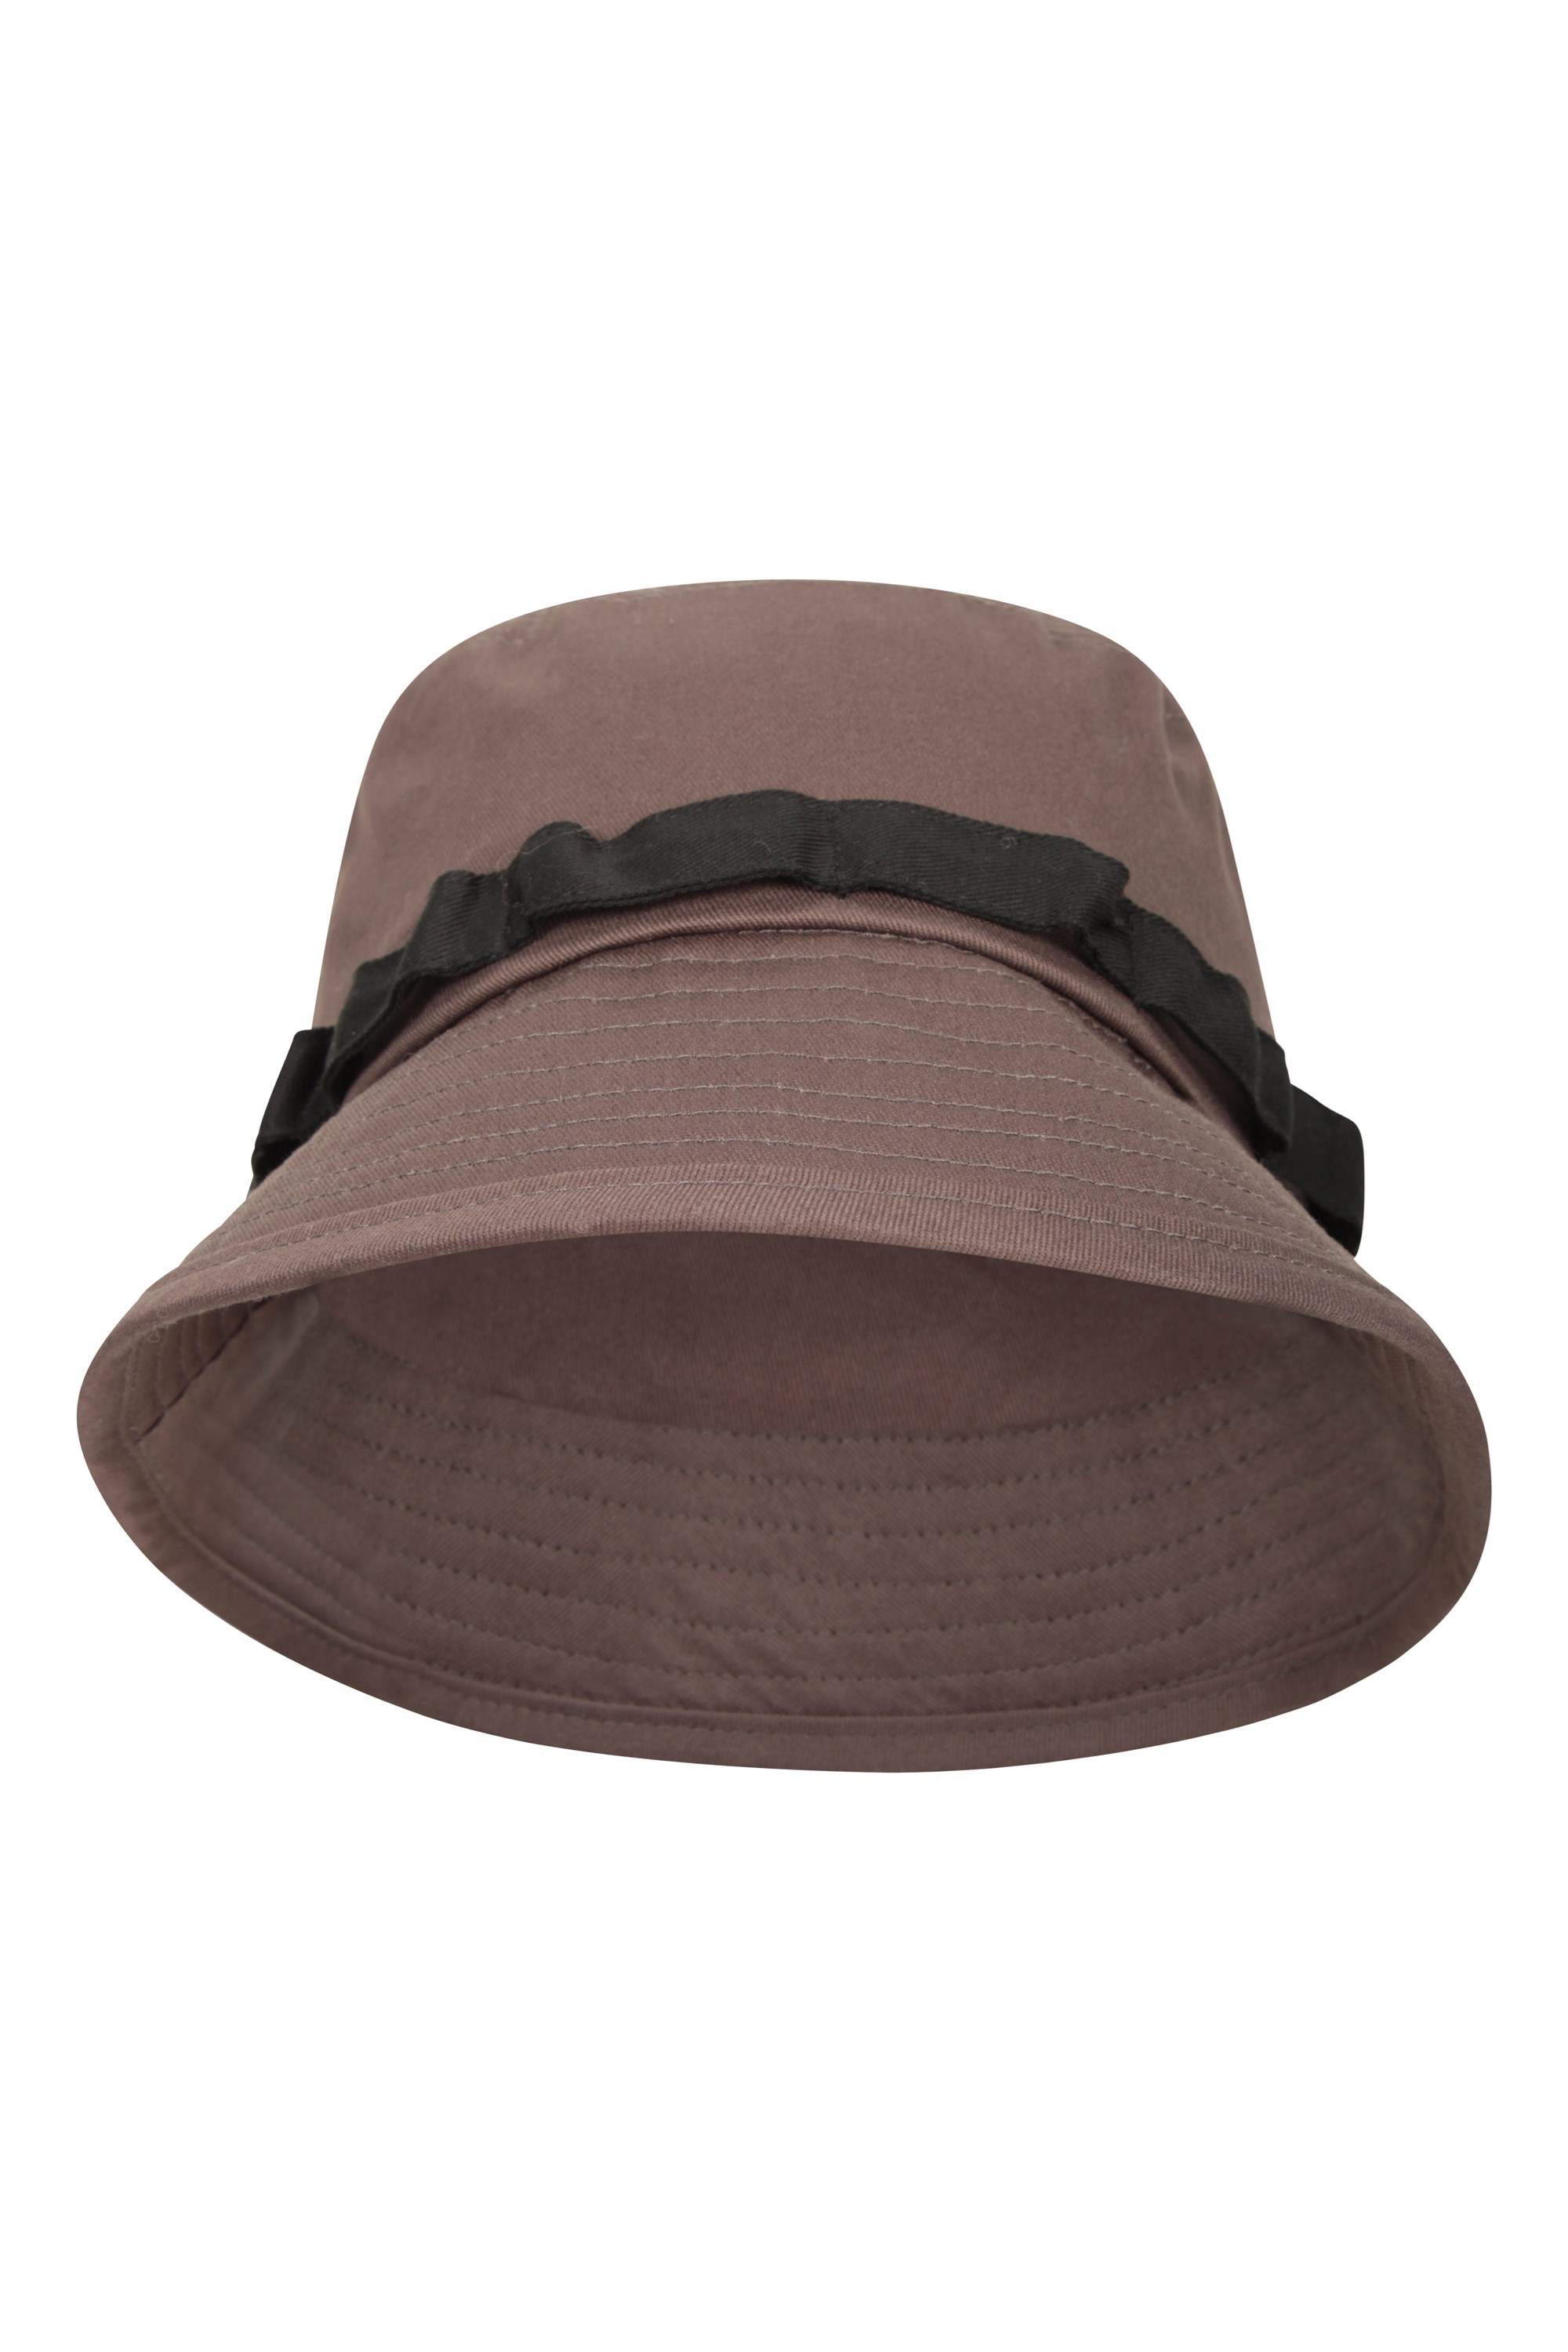 Mountain Warehouse Australian Wide Brimmed Hat - UPF50+ Summer Cap